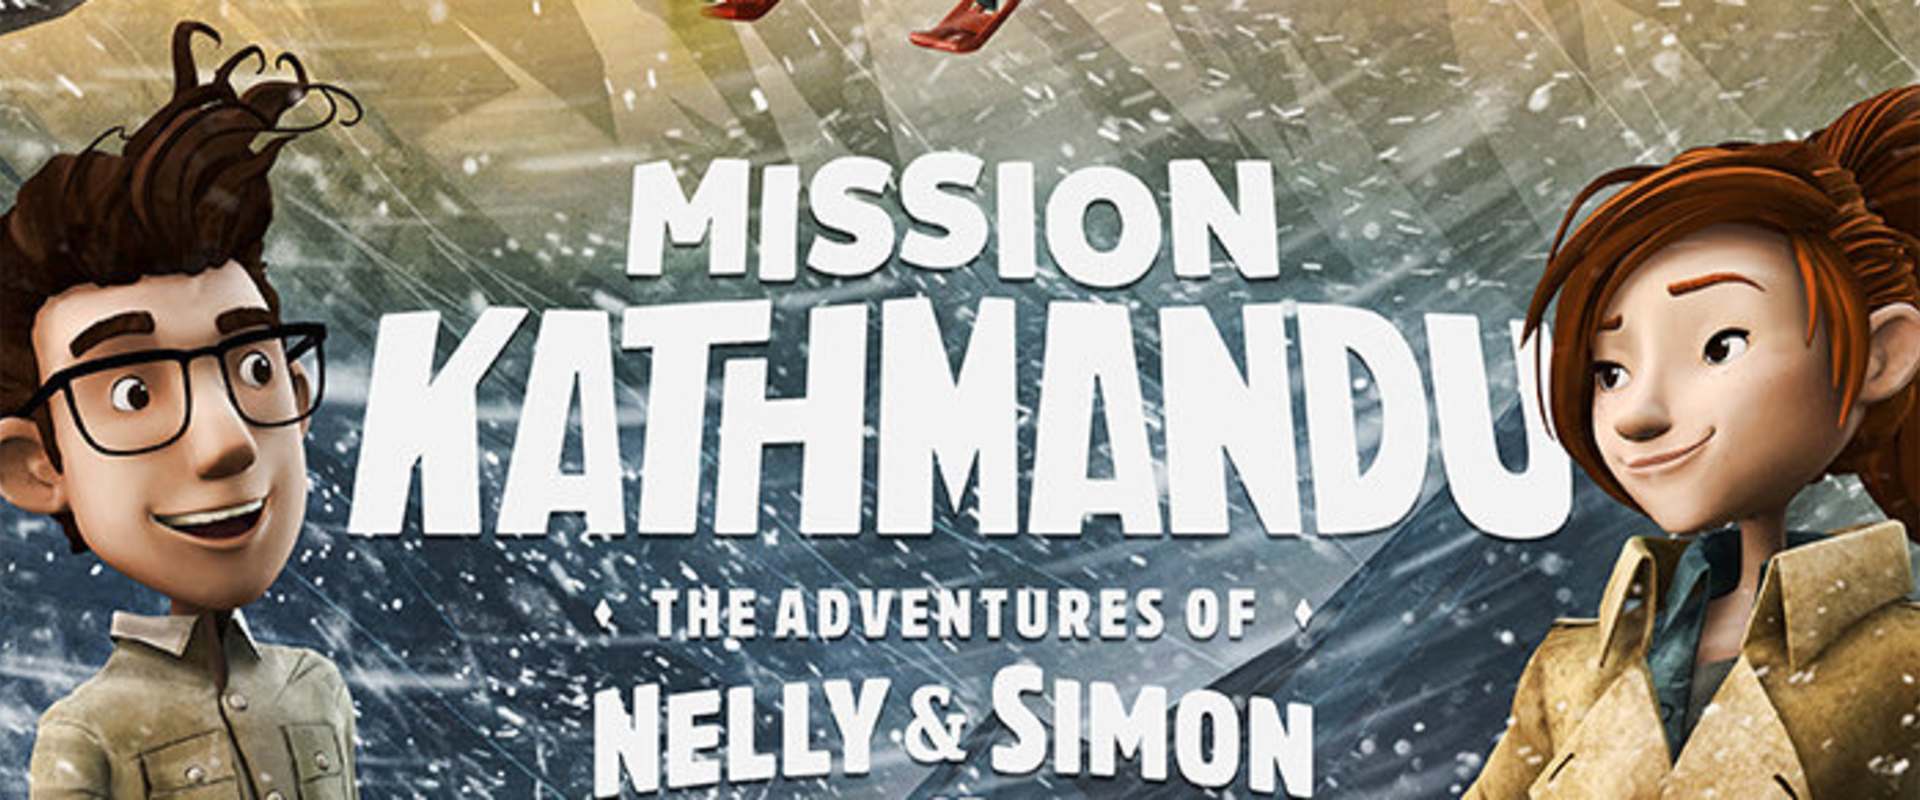 Mission Kathmandu: The Adventures of Nelly & Simon background 2